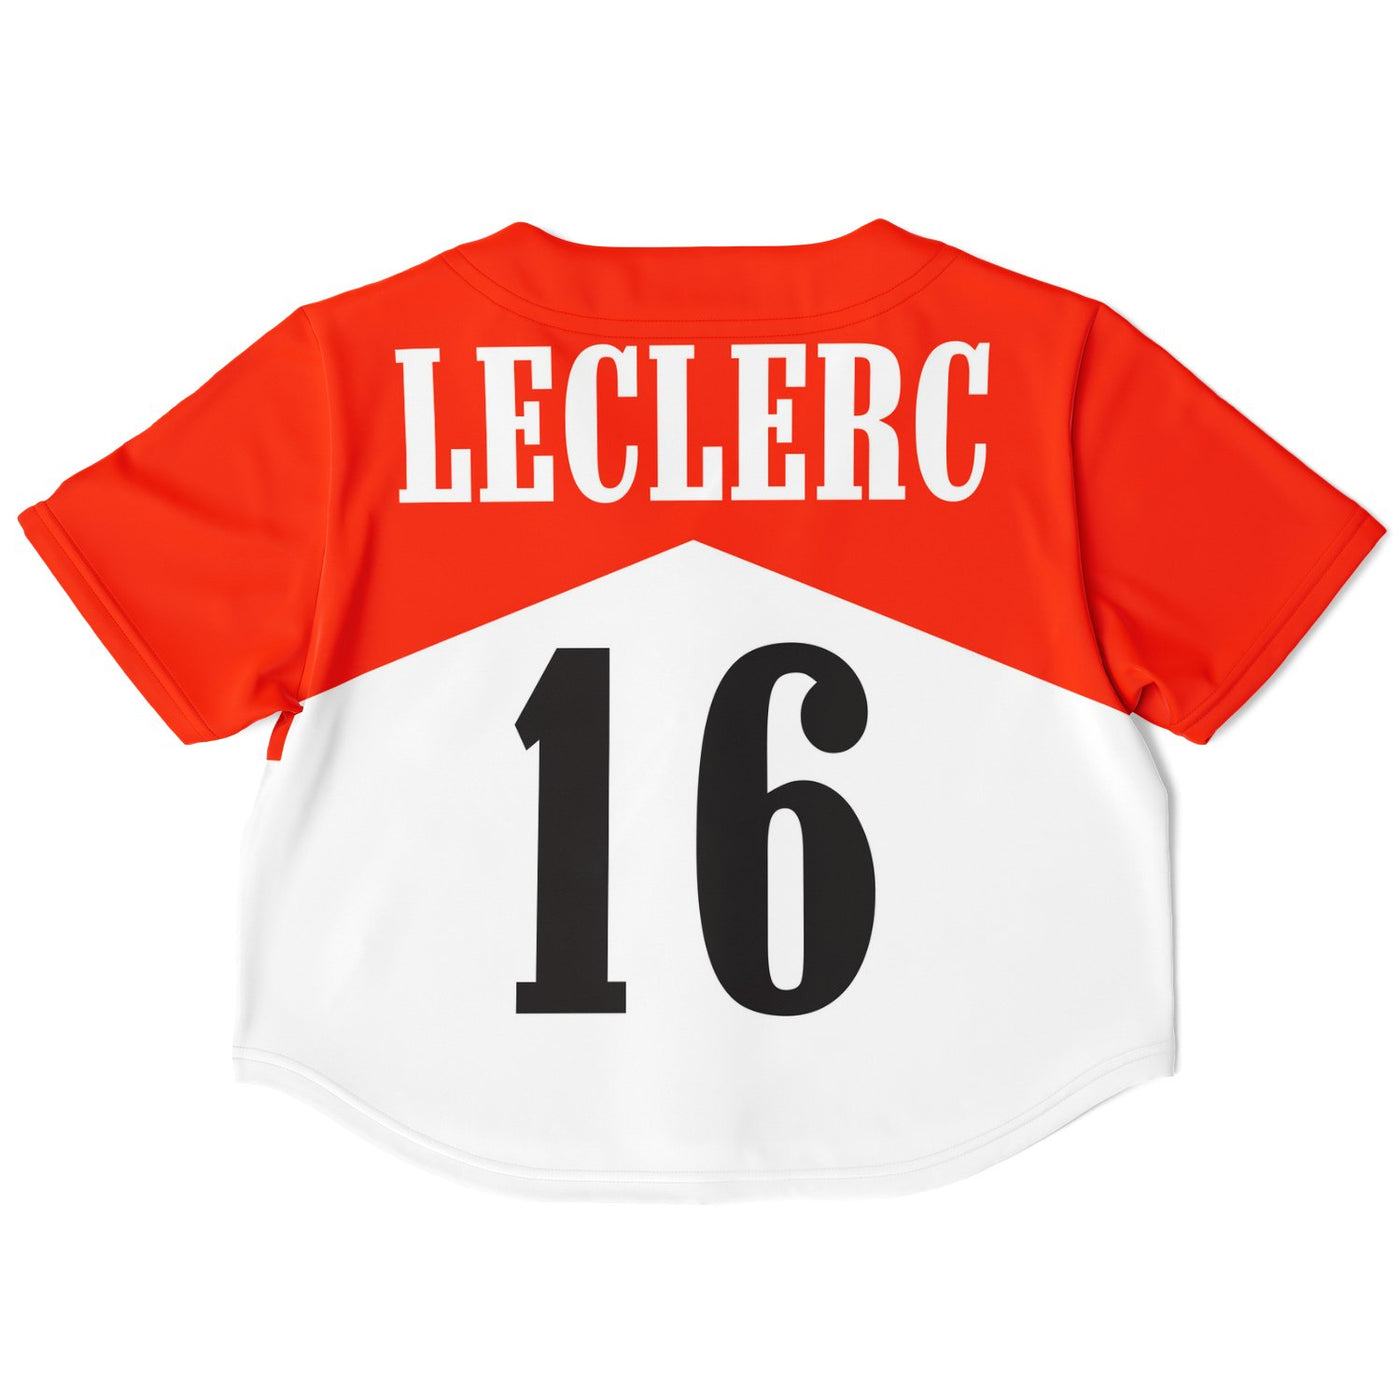 Leclerc - Alternate Crop Top Jersey - Furious Motorsport